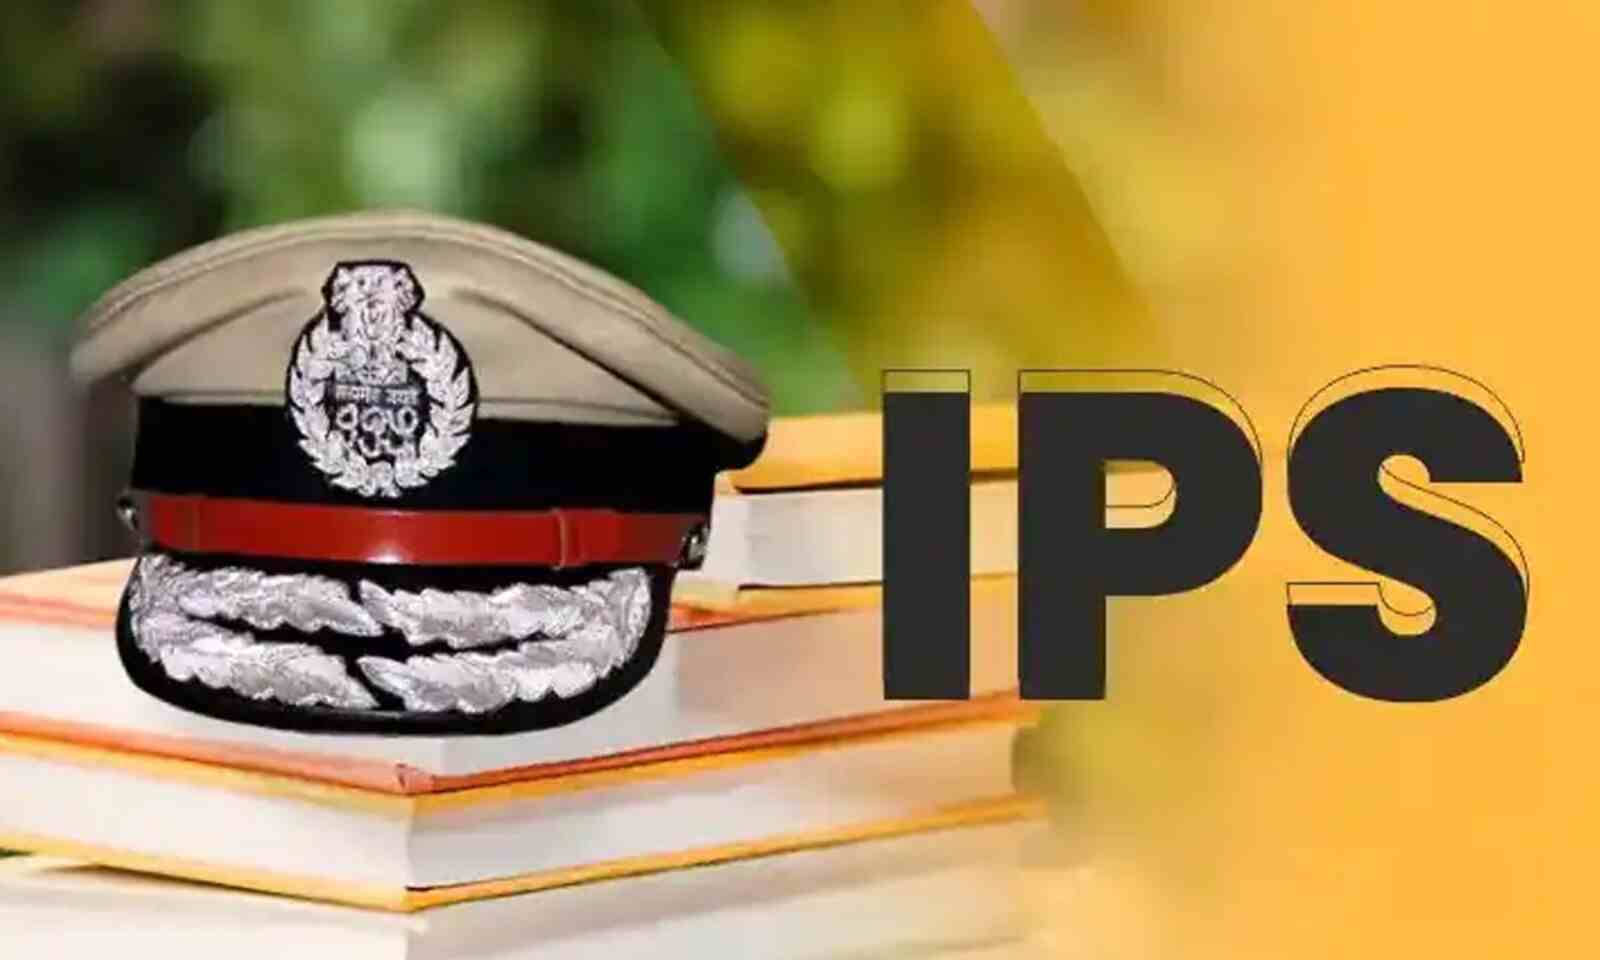 Download Ips Officer Logo Wallpaper 